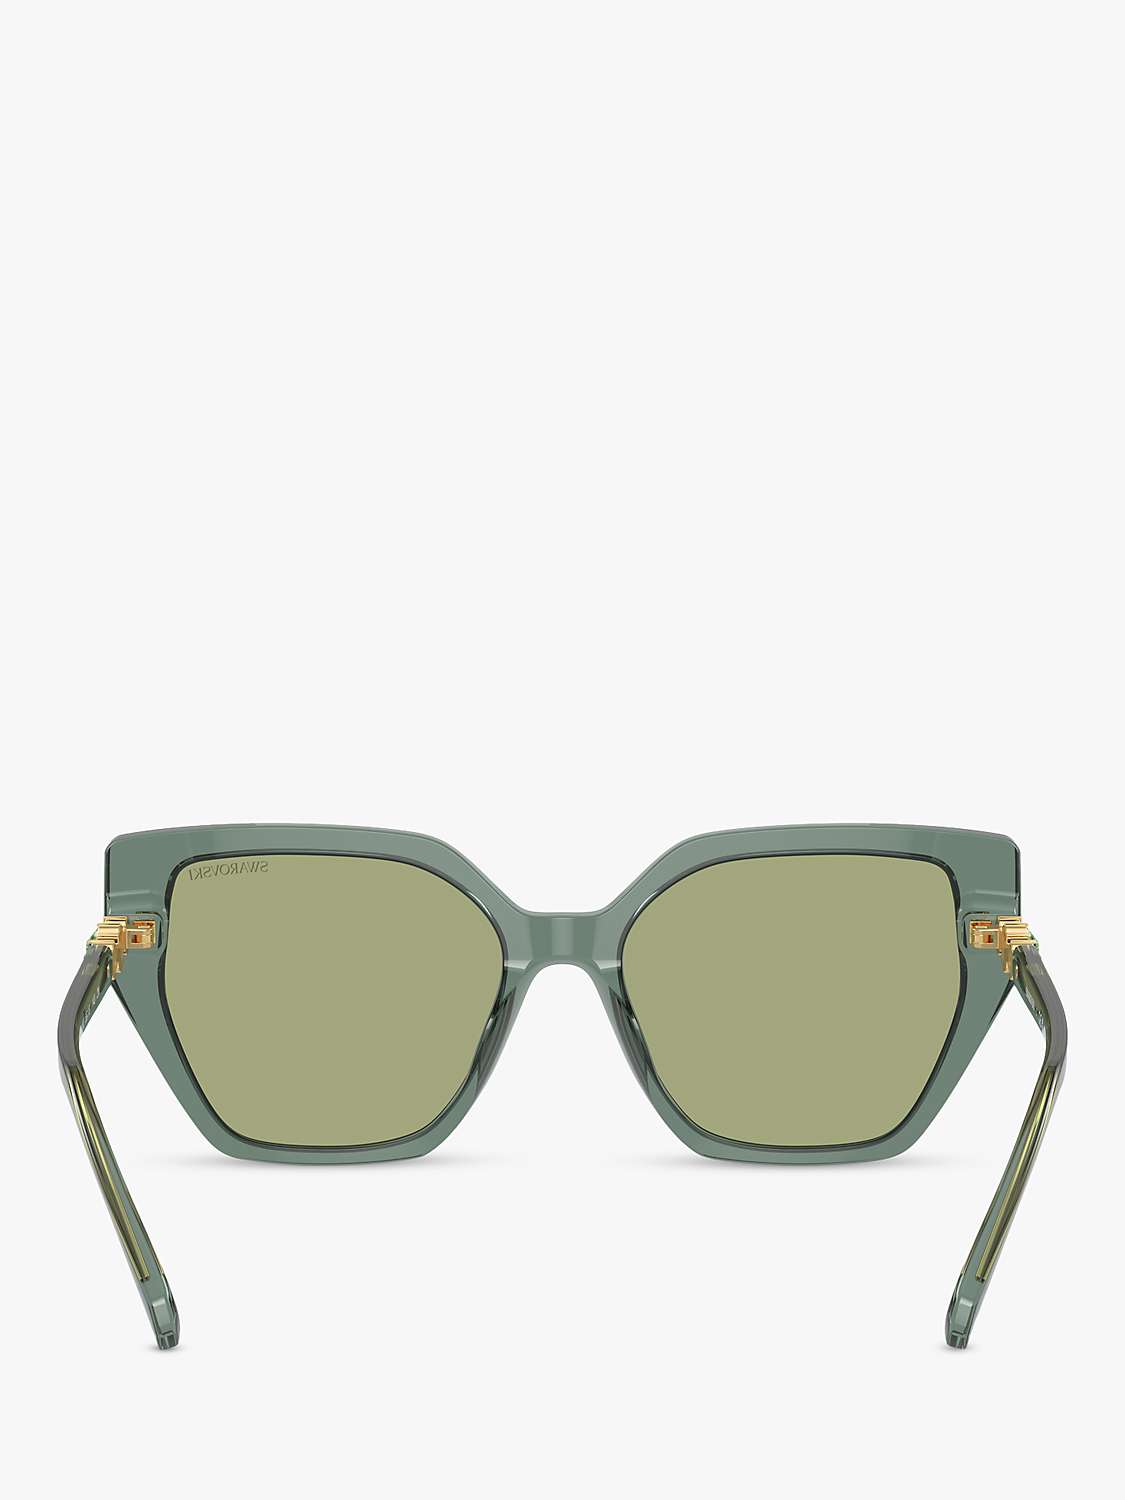 Buy Swarovski SK6016 Women's Irregular Sunglasses Online at johnlewis.com